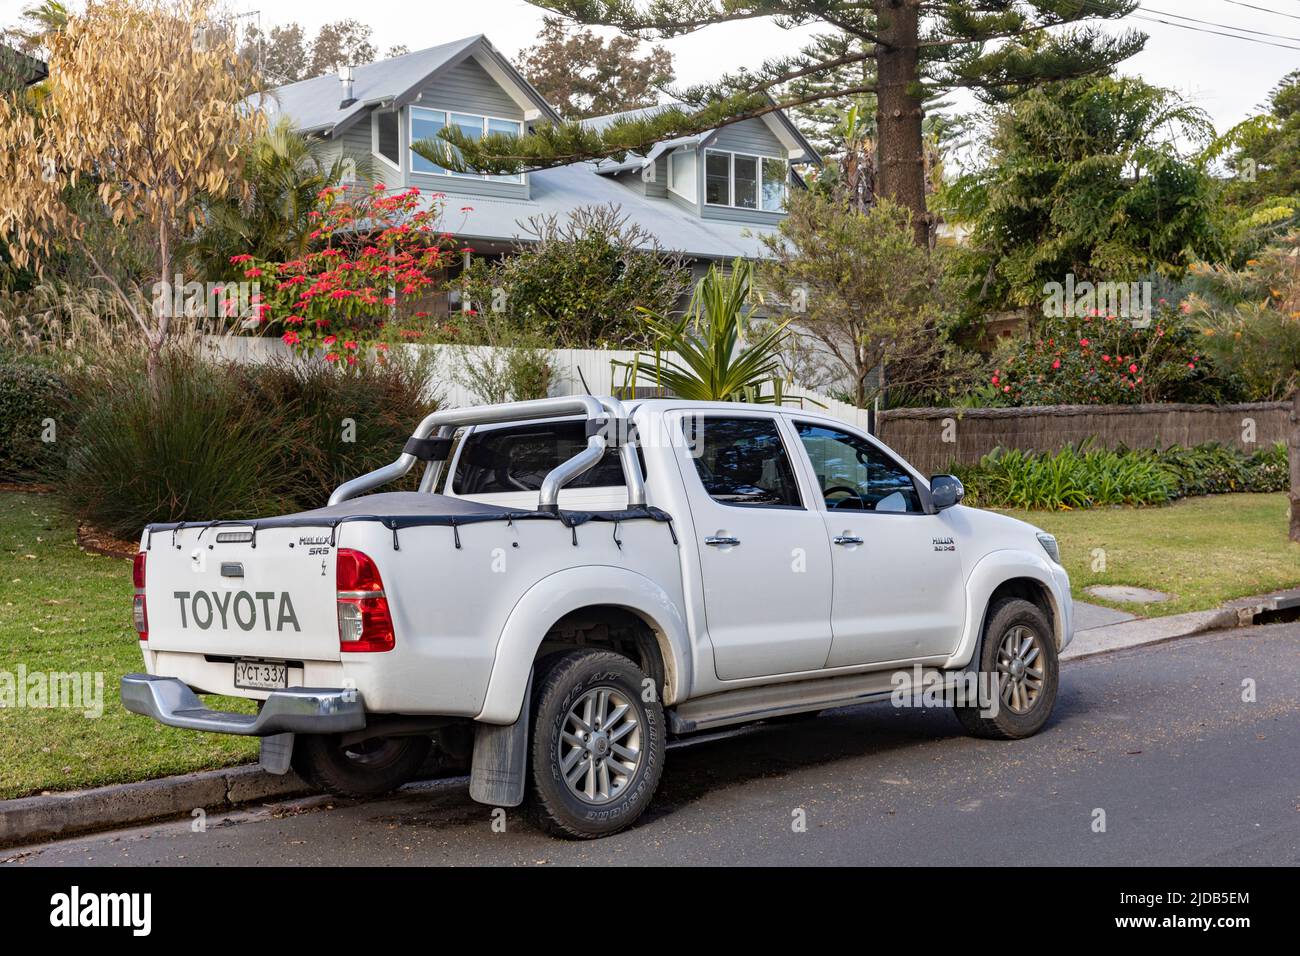 2014 model white Toyota Hilux ute utility vehicle parked in Avalon Beach street road,Sydney,NSW,Australia Stock Photo